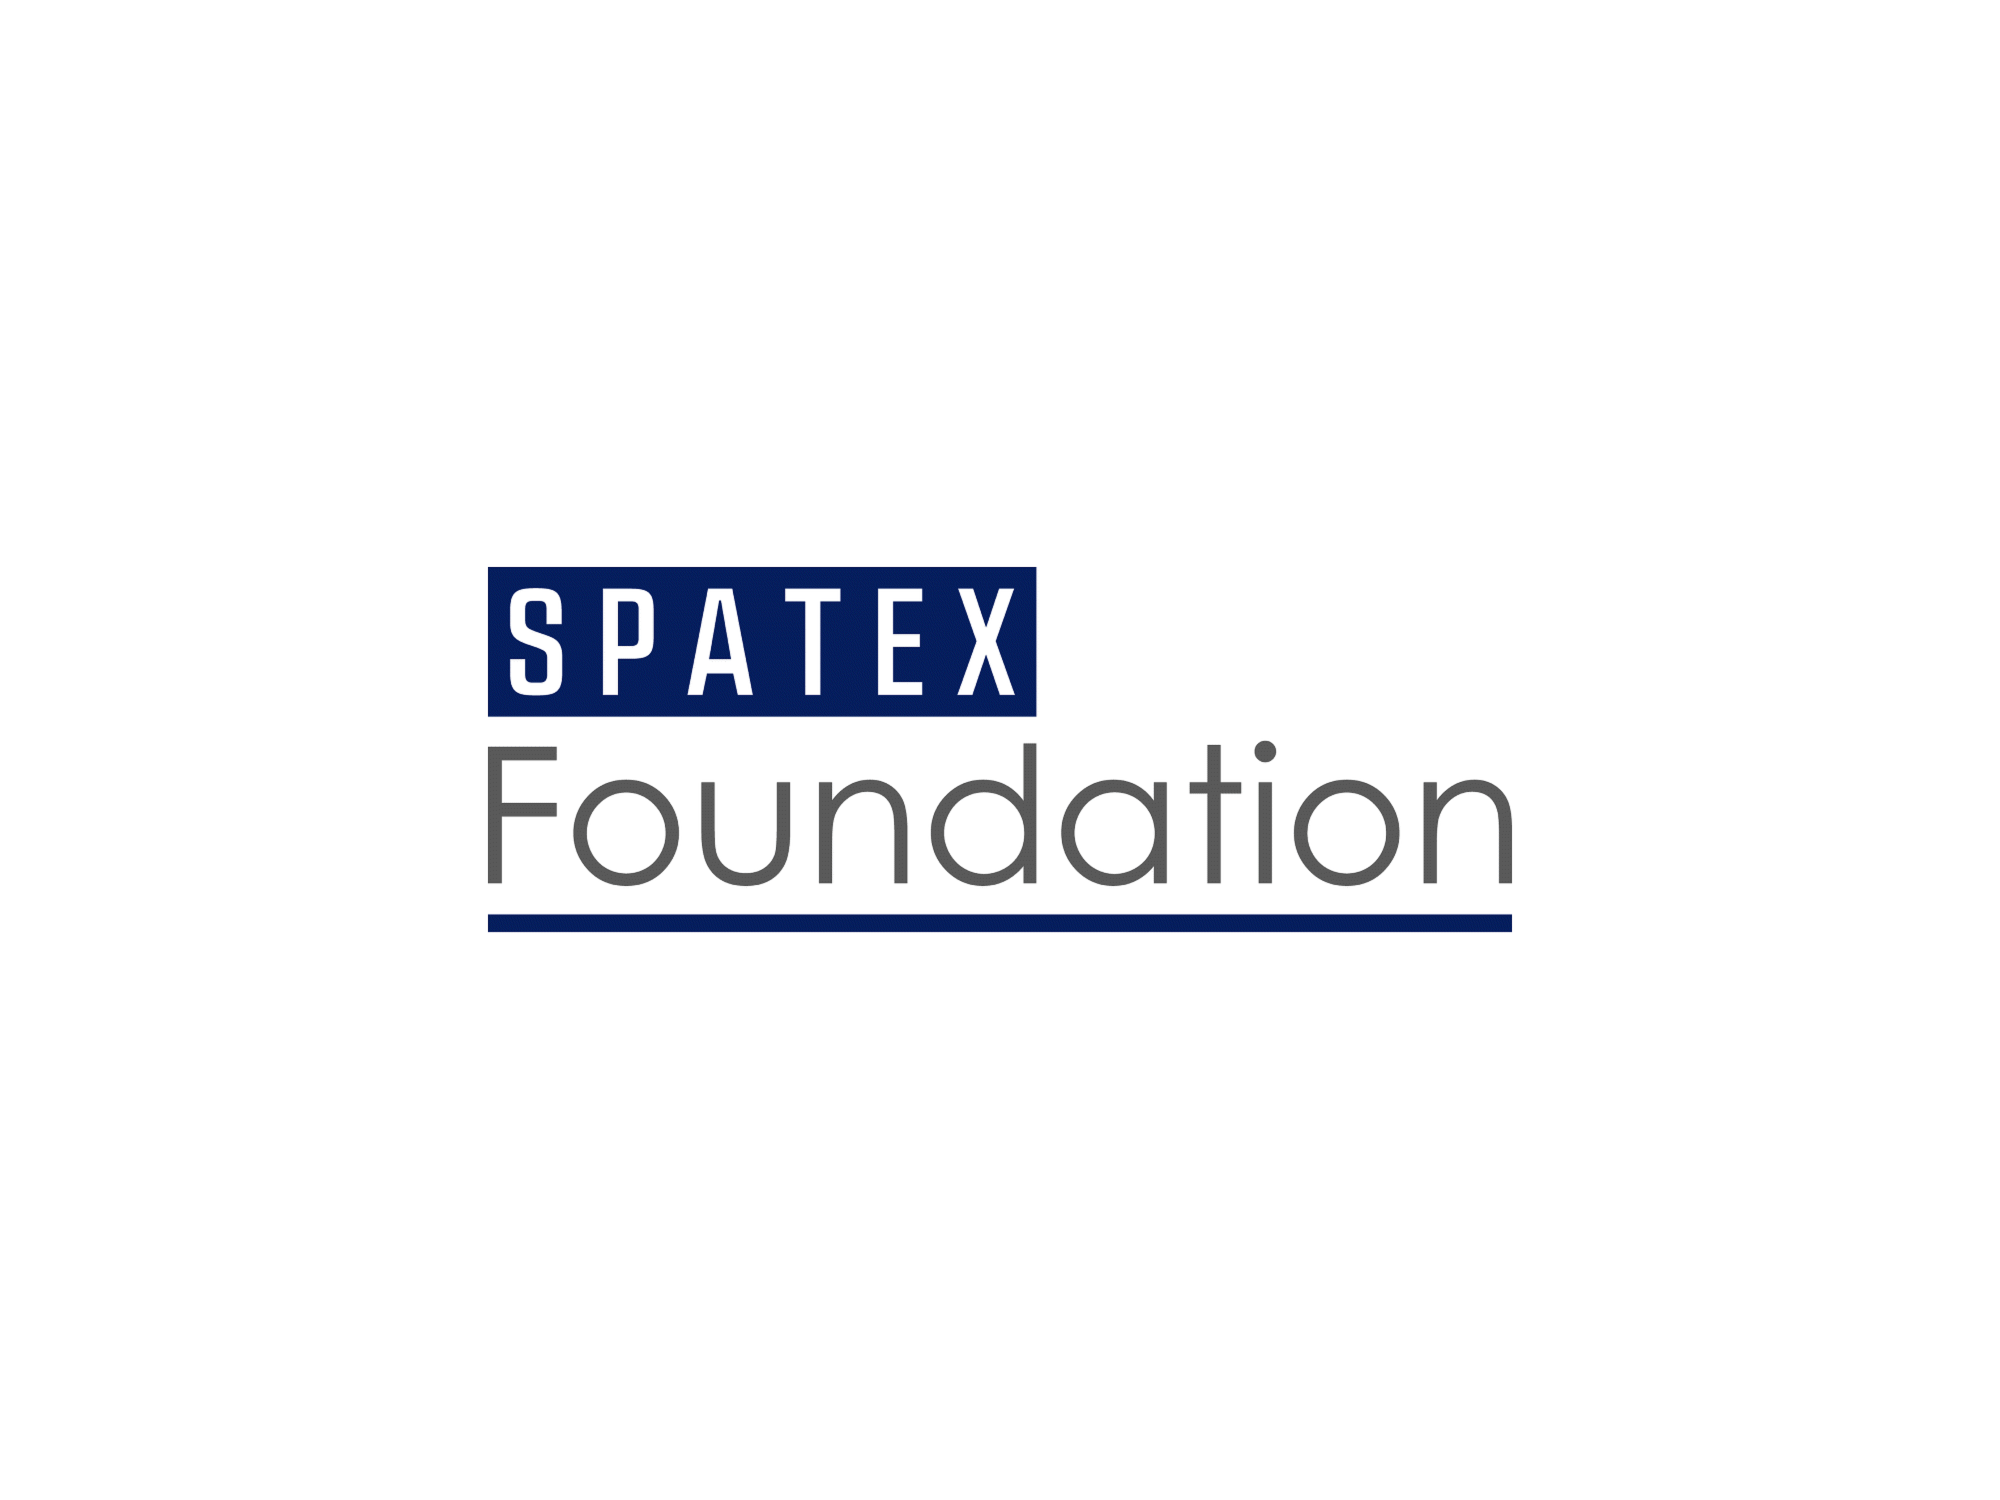 SPATEX Foundation